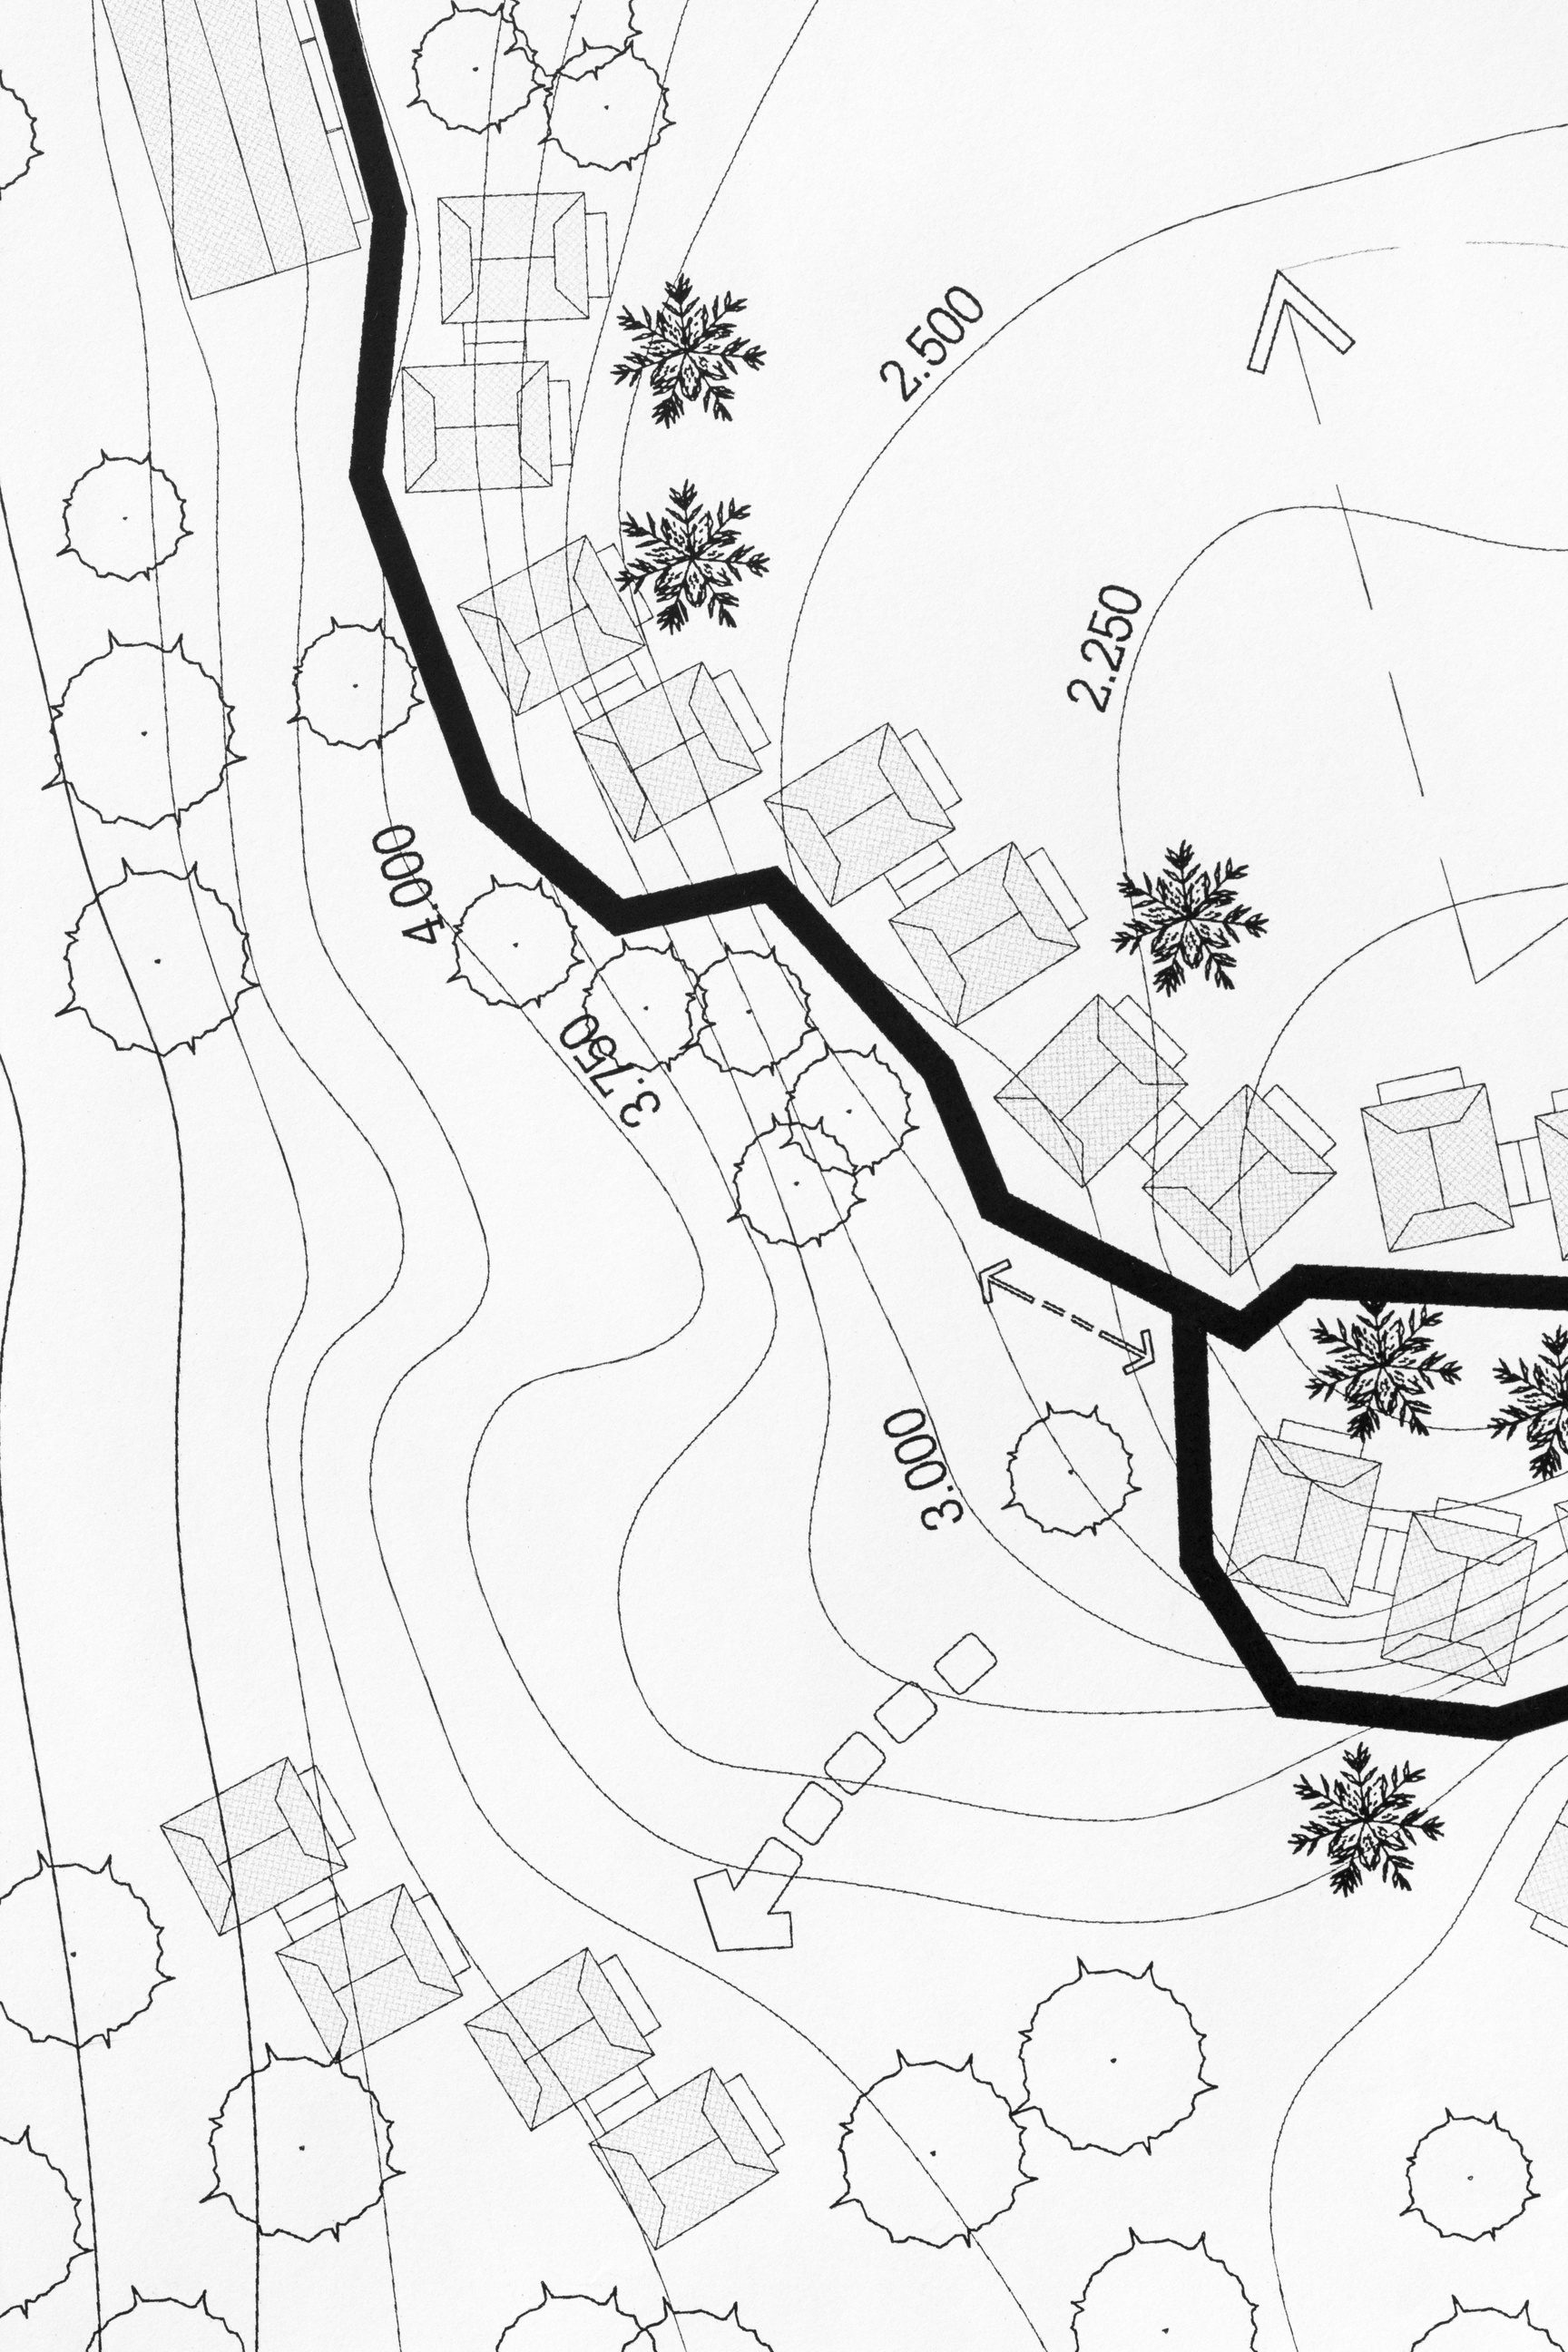 Landscape Architect Designing on site analysis plan